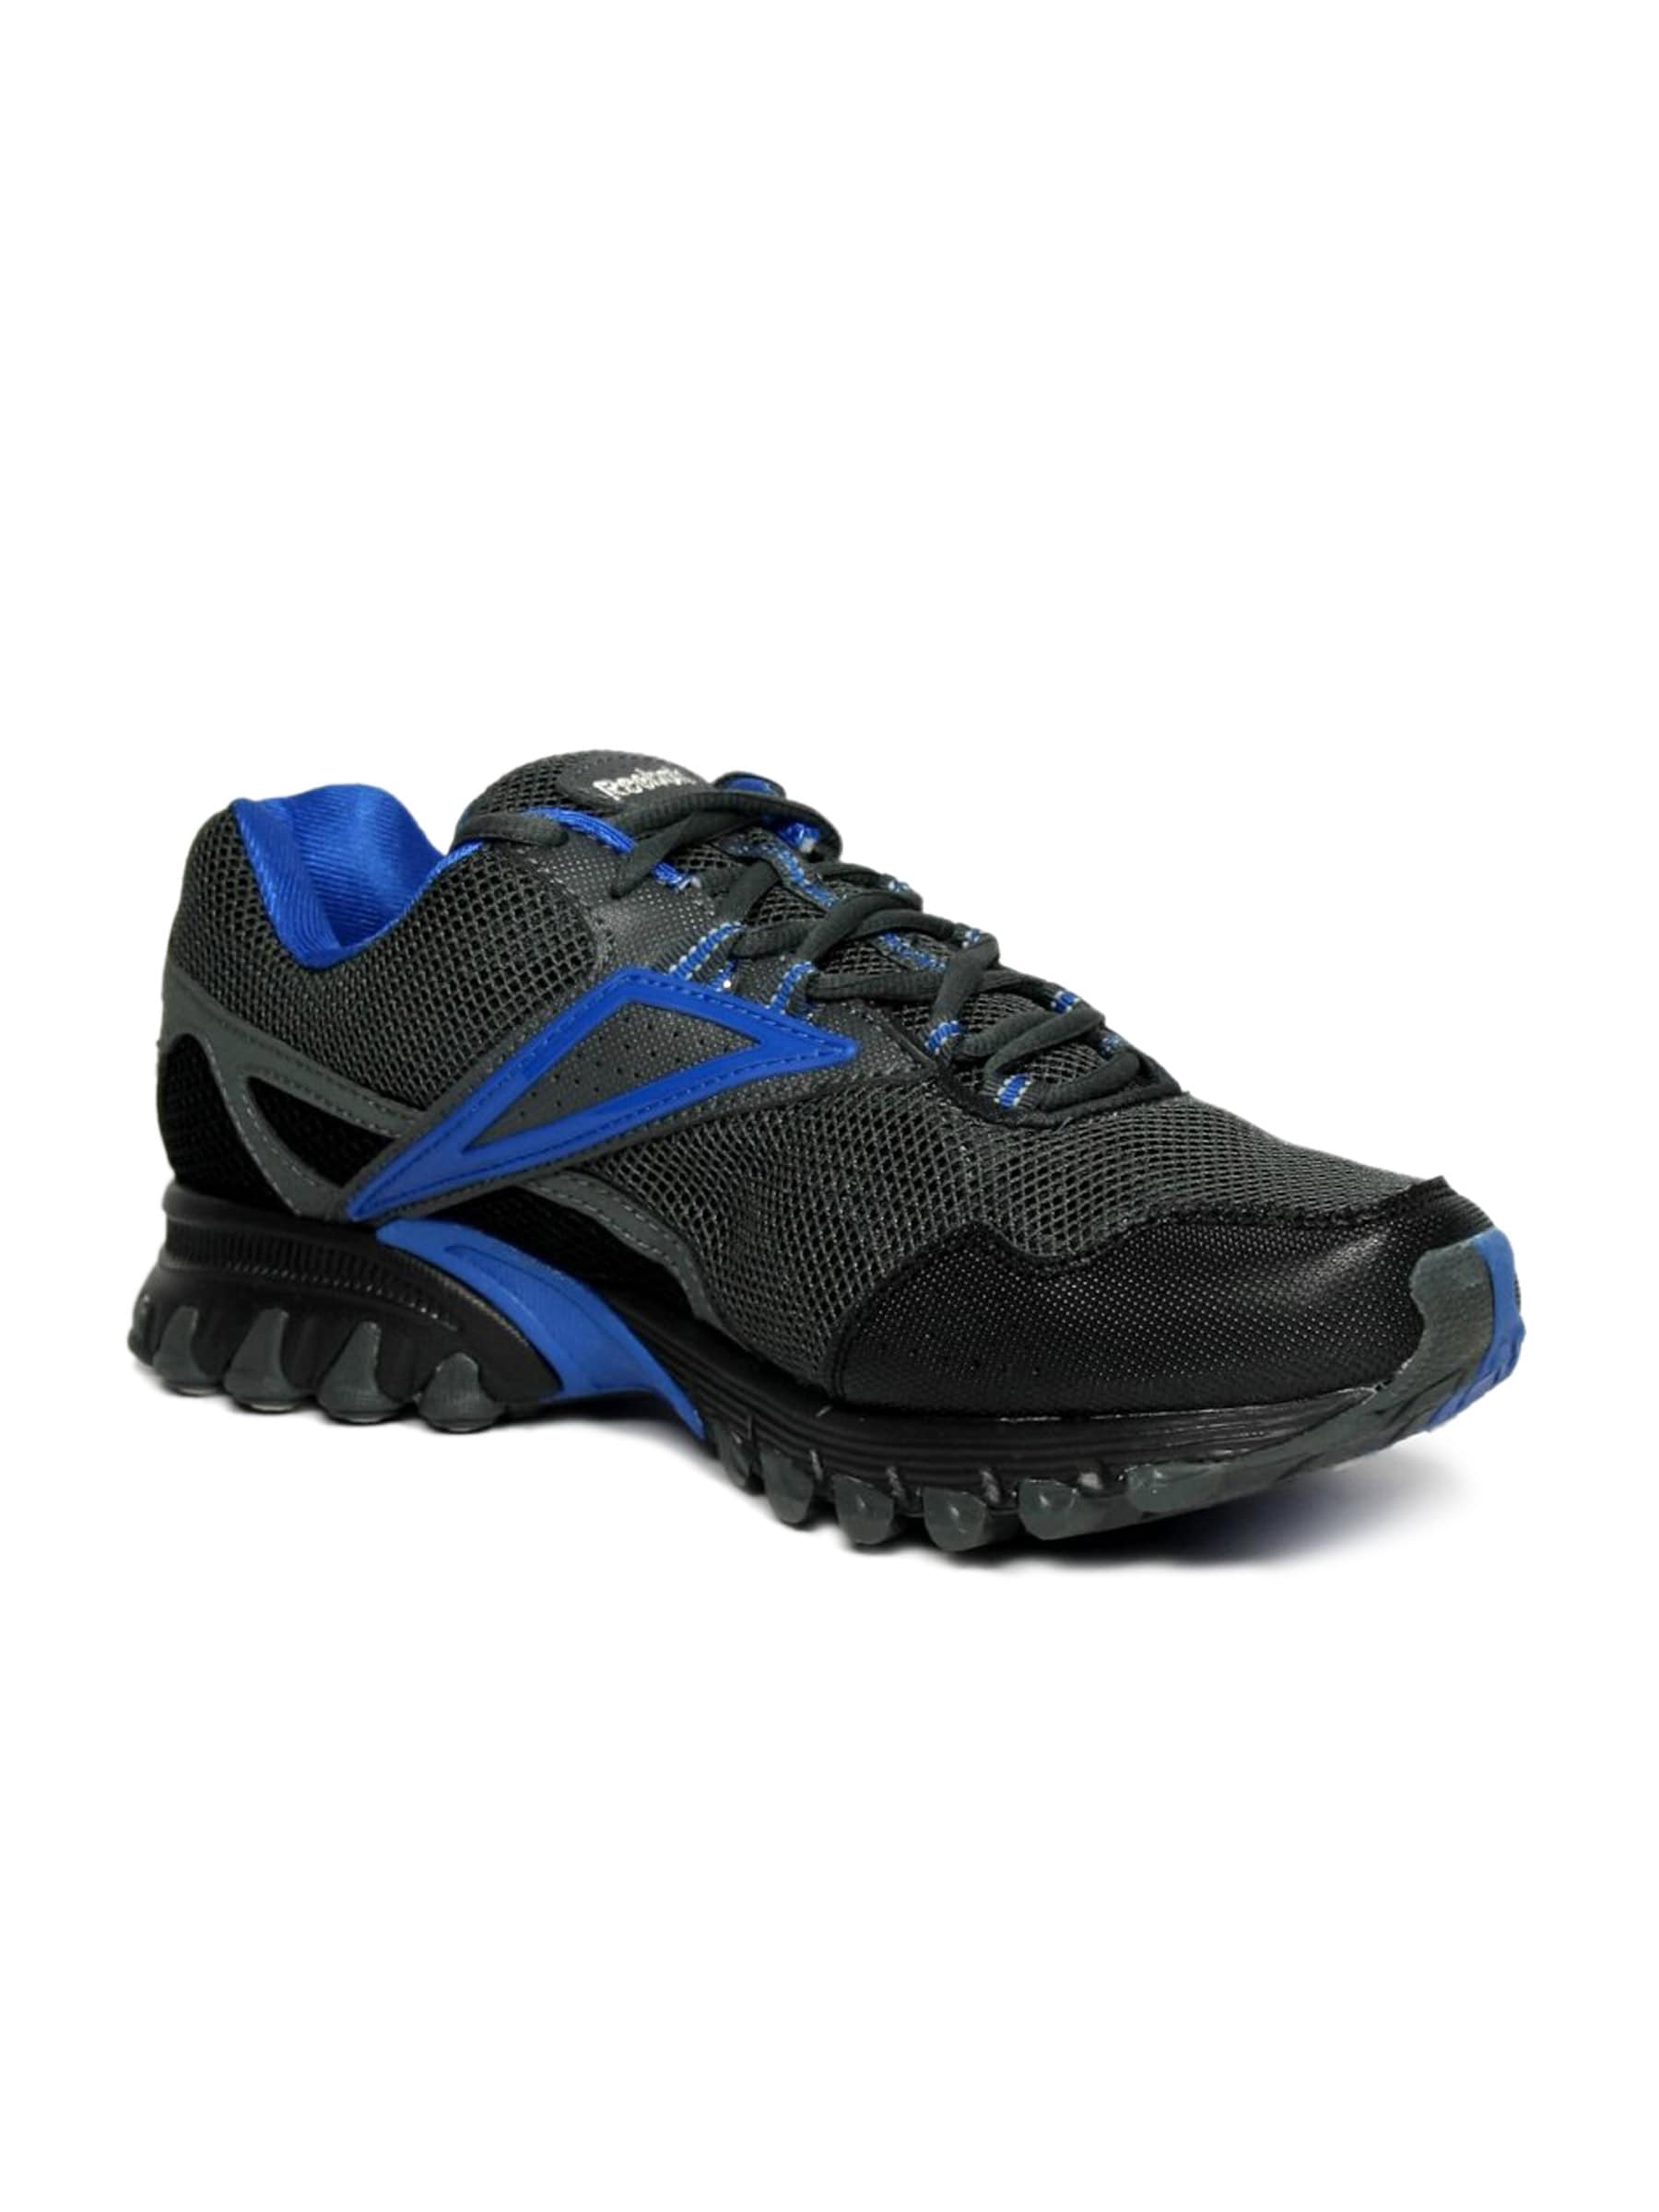 Reebok Men's Trail Mud Slinger Black Blue Shoe